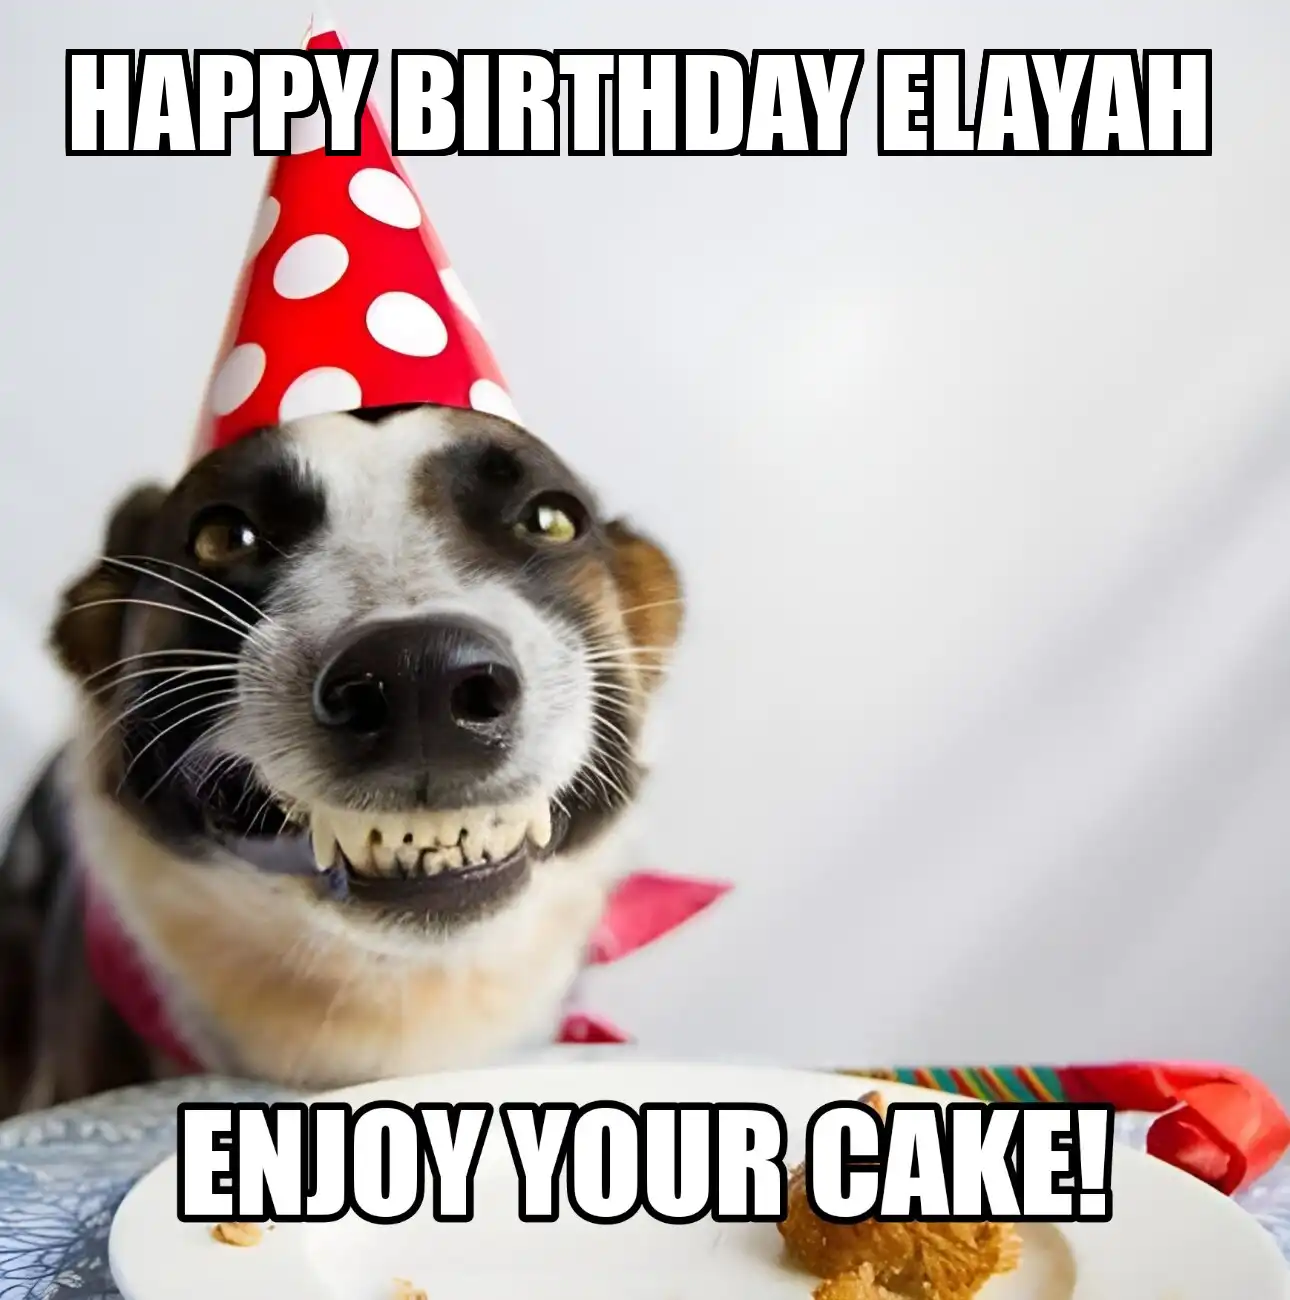 Happy Birthday Elayah Enjoy Your Cake Dog Meme